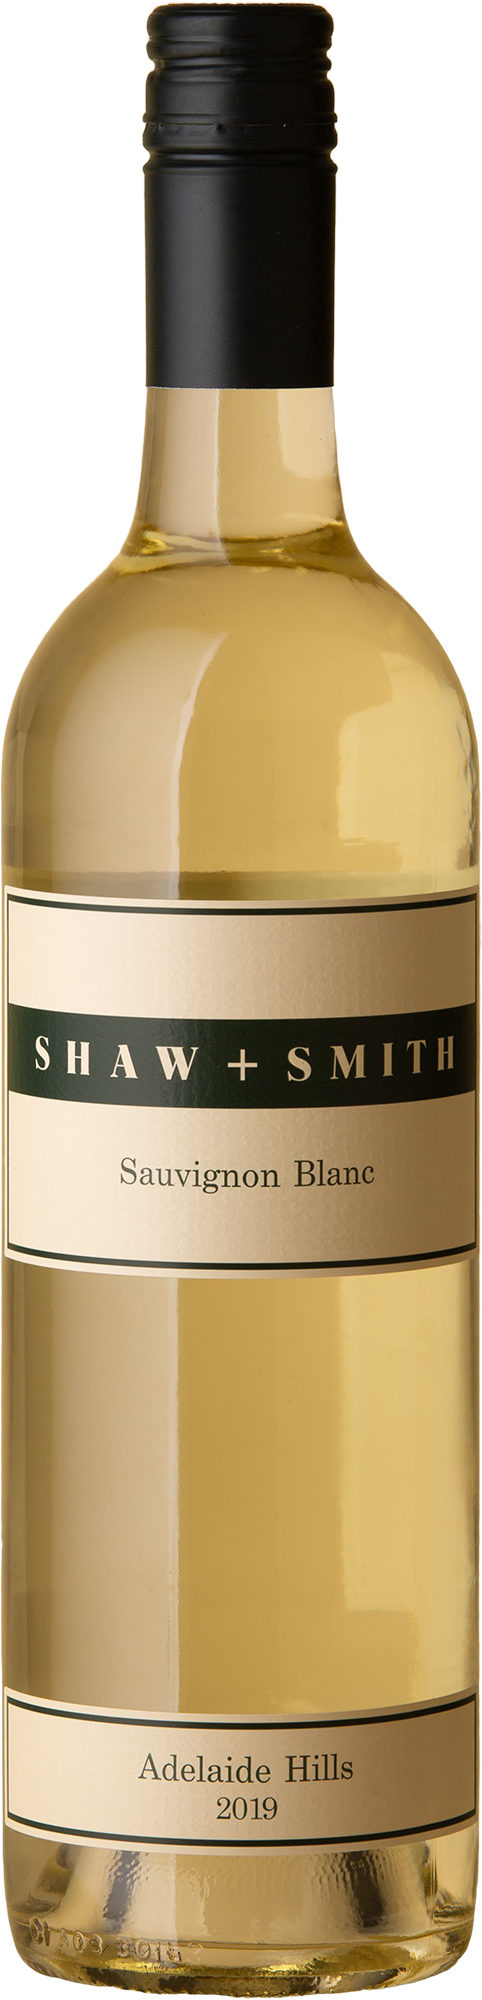 Shaw and Smith - Sauvignon Blanc 2019 White Wine